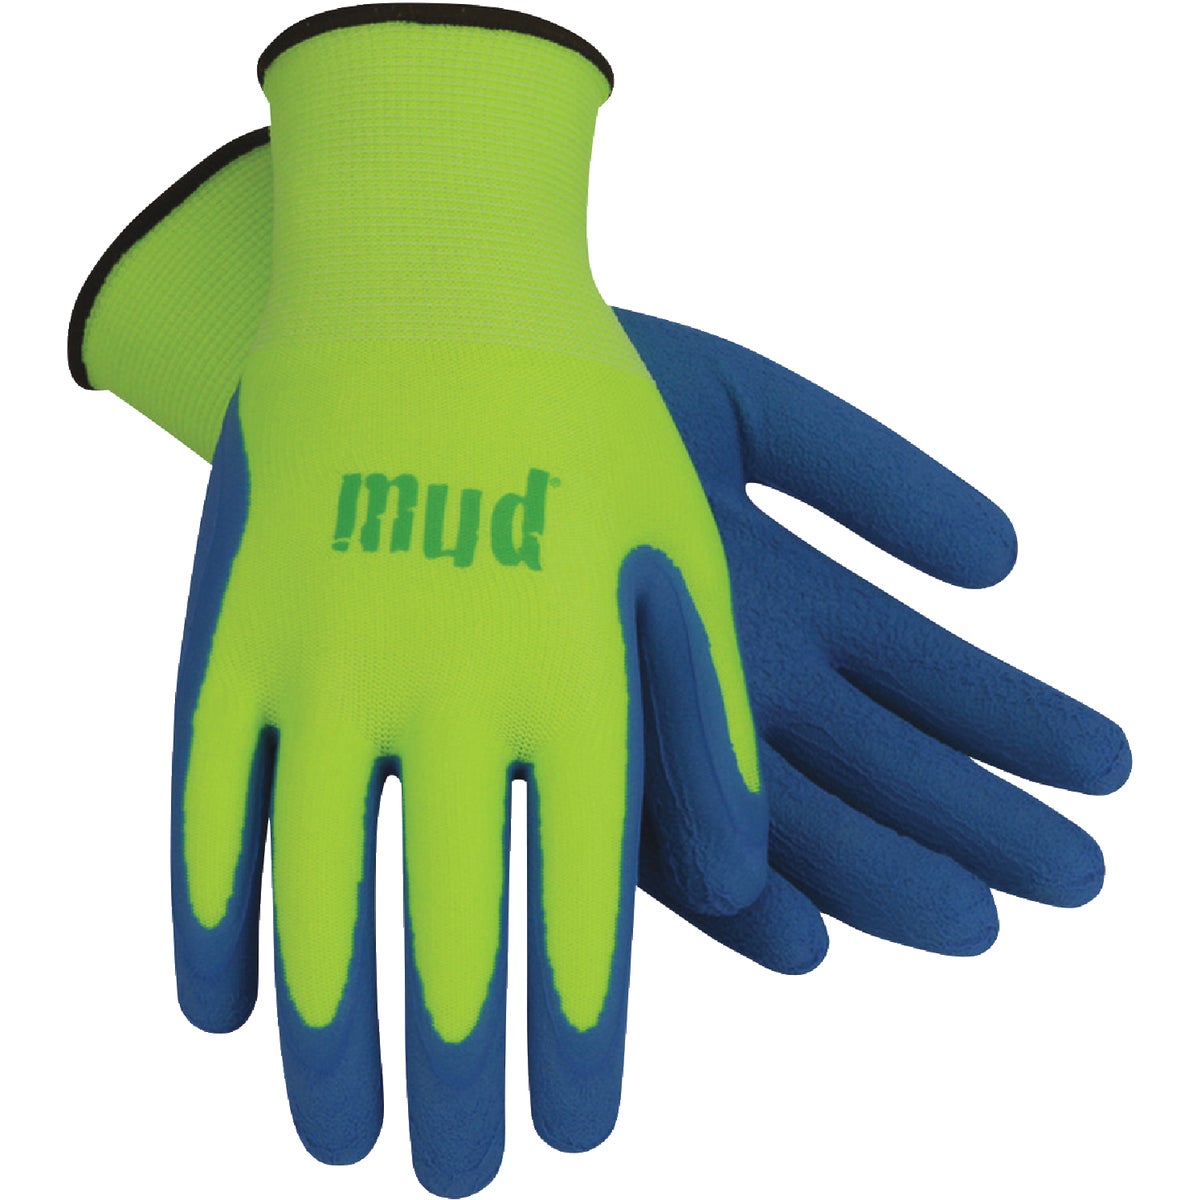 Mud Super Grip Women's Medium Latex Coated Lime Green Garden Glove